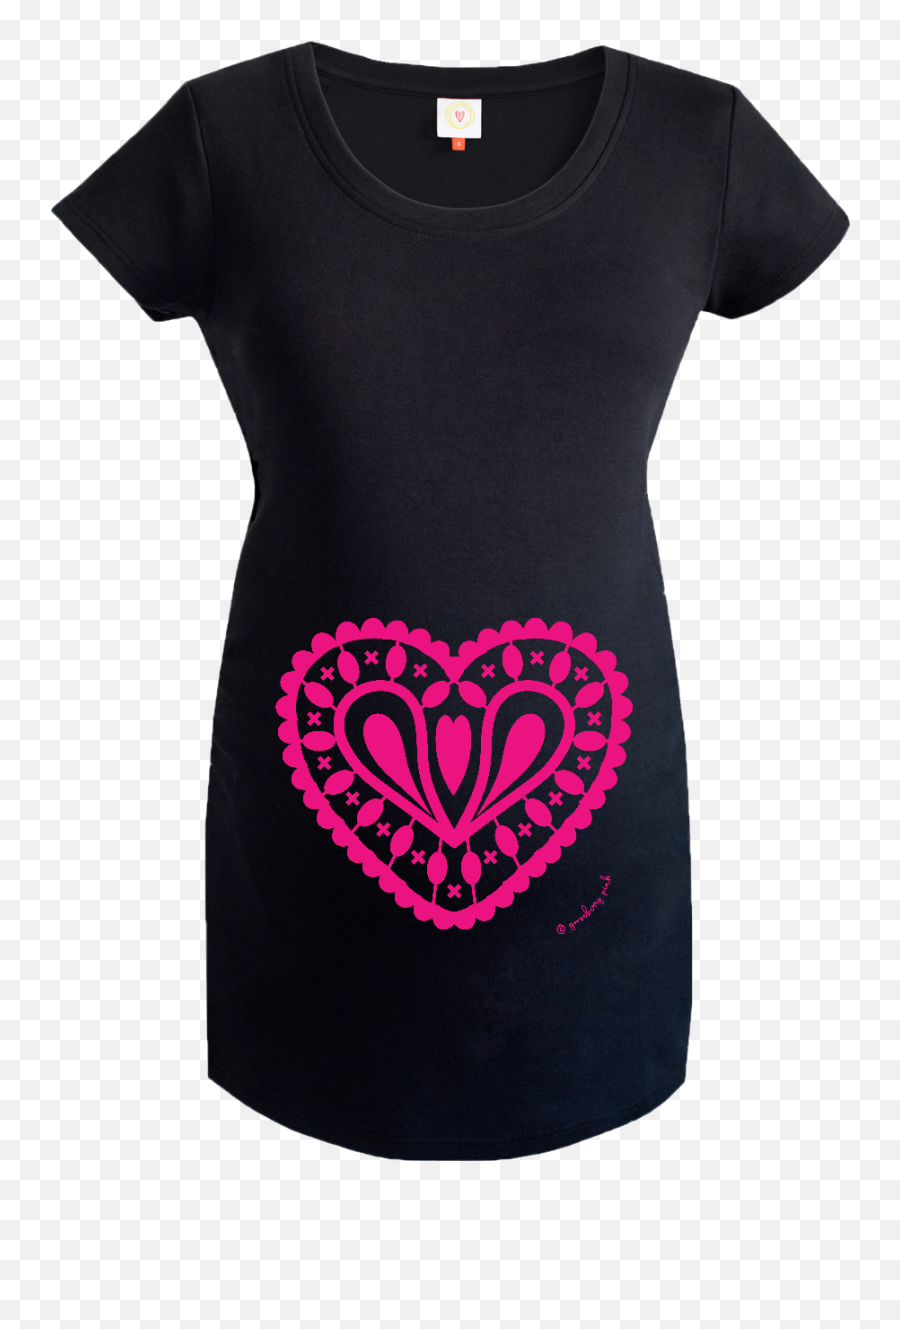 Hot Pink Heart - Scoop Neck Emoji,Heart Transparent Background